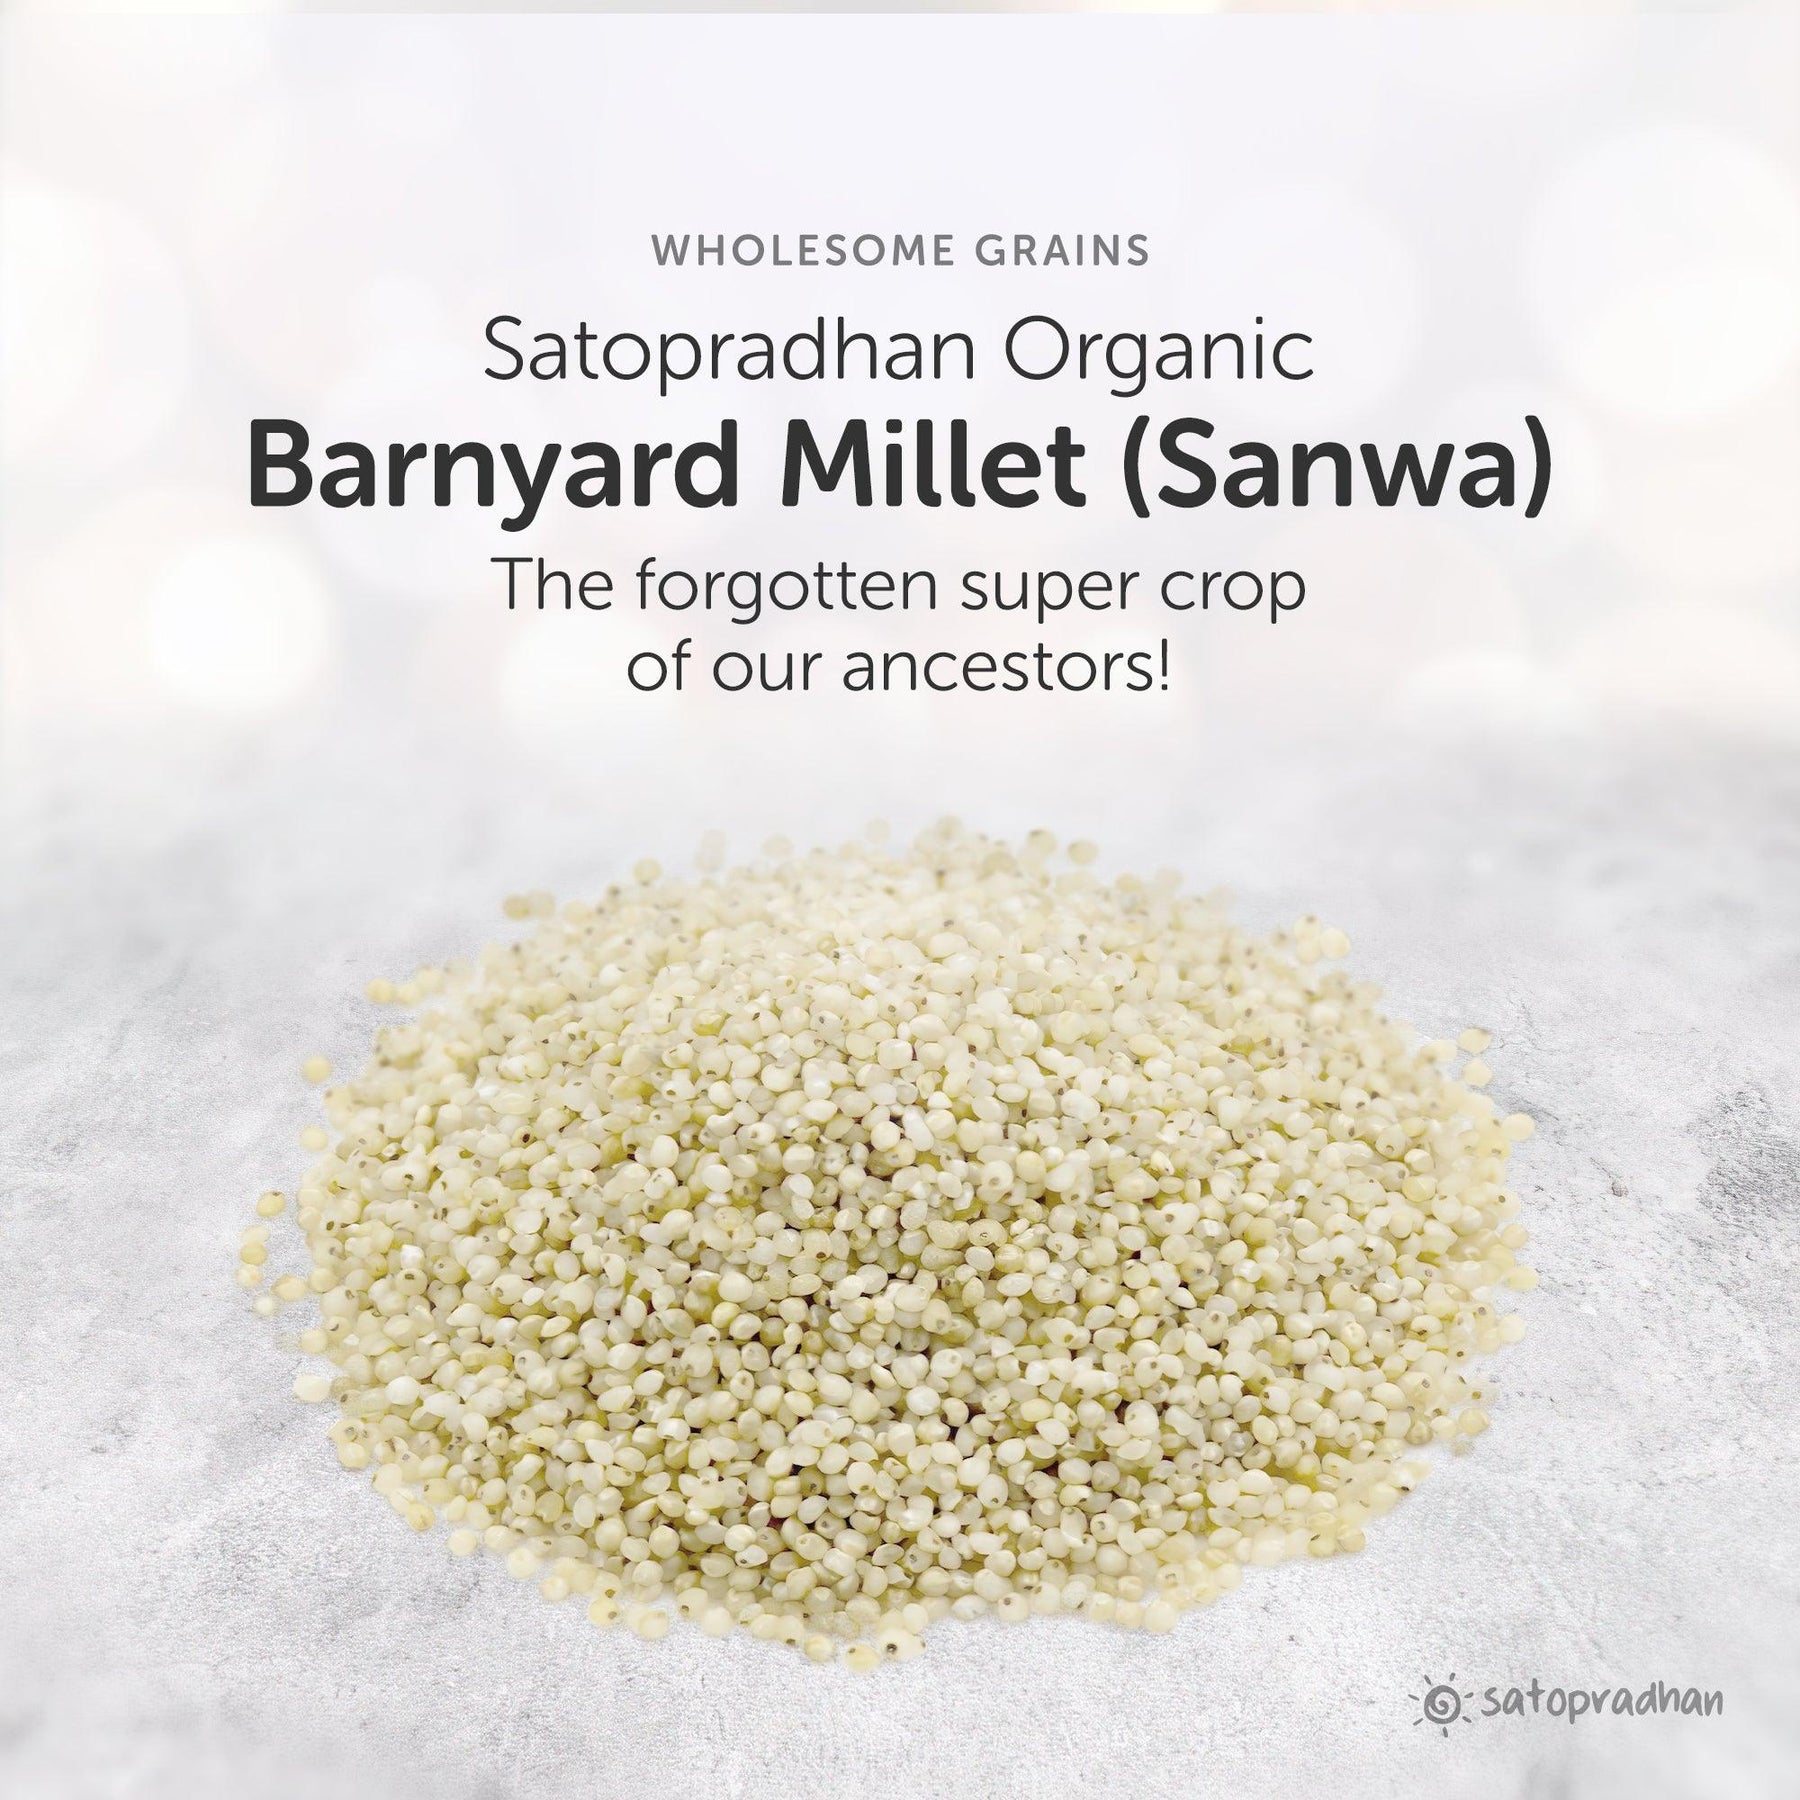 Barnyard Millet - Sanwa 800g - Natural, Organic & Unpolished - Gluten free and Wholesome Grain | Samak Rice | Fasting Food - Satopradhan